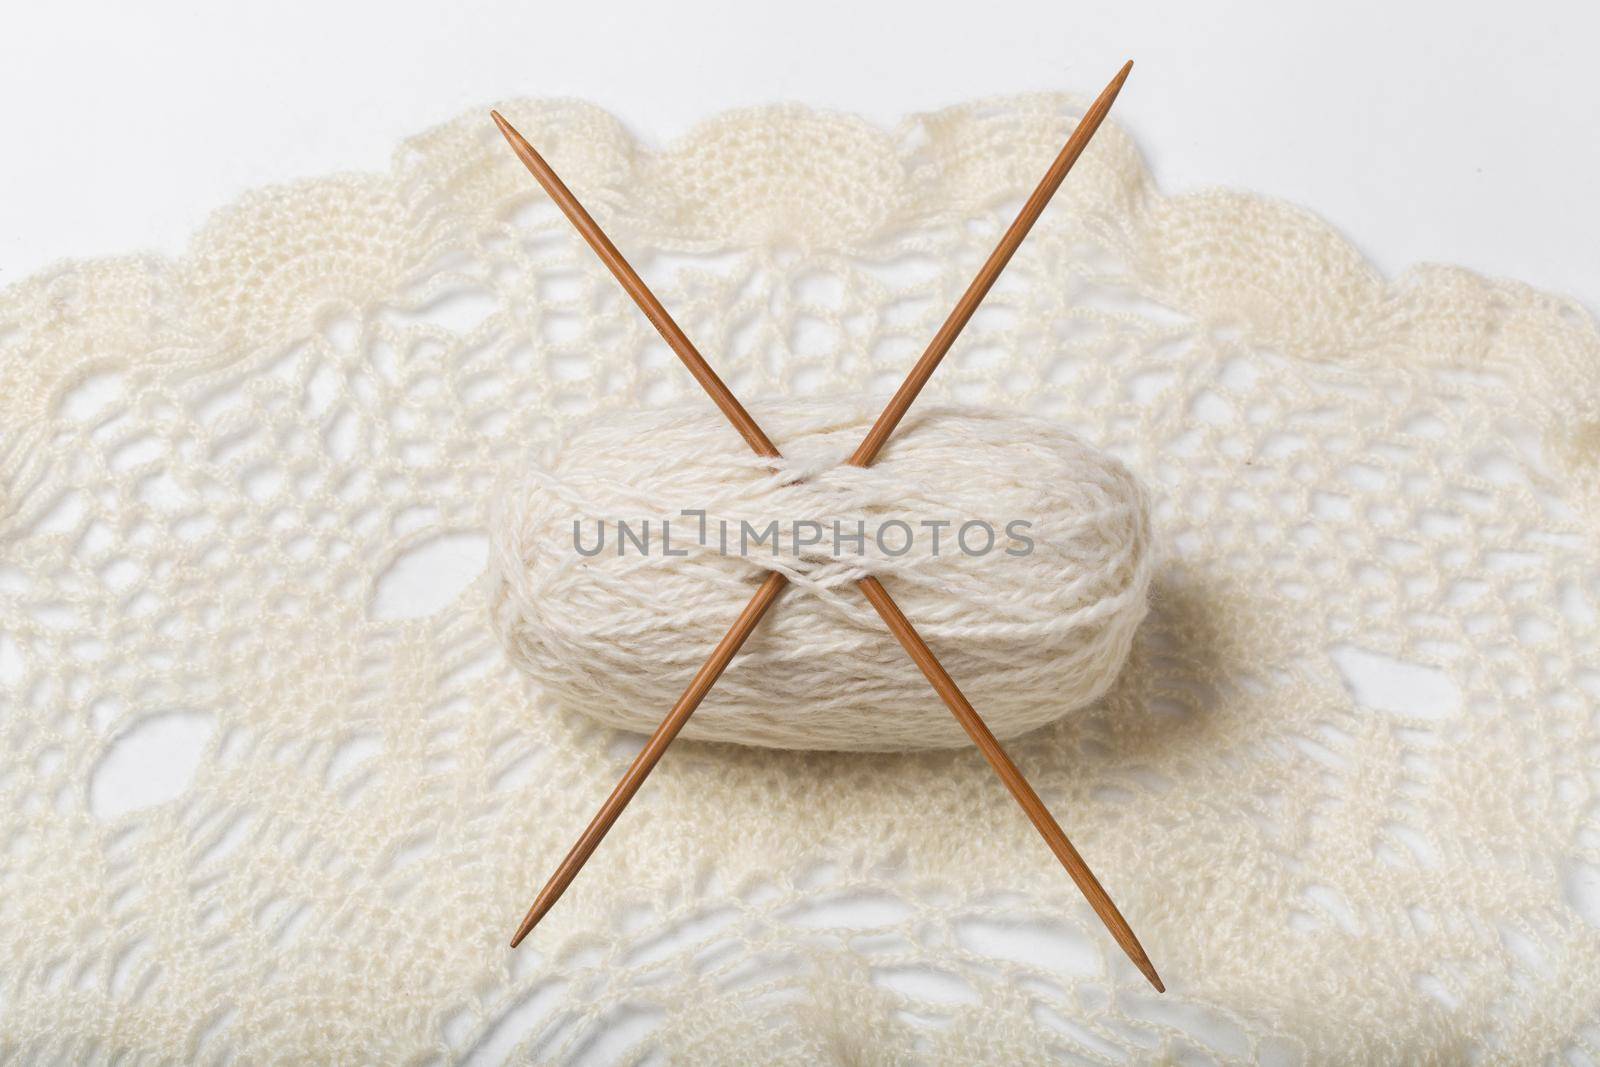 Ball of yarn and knitting